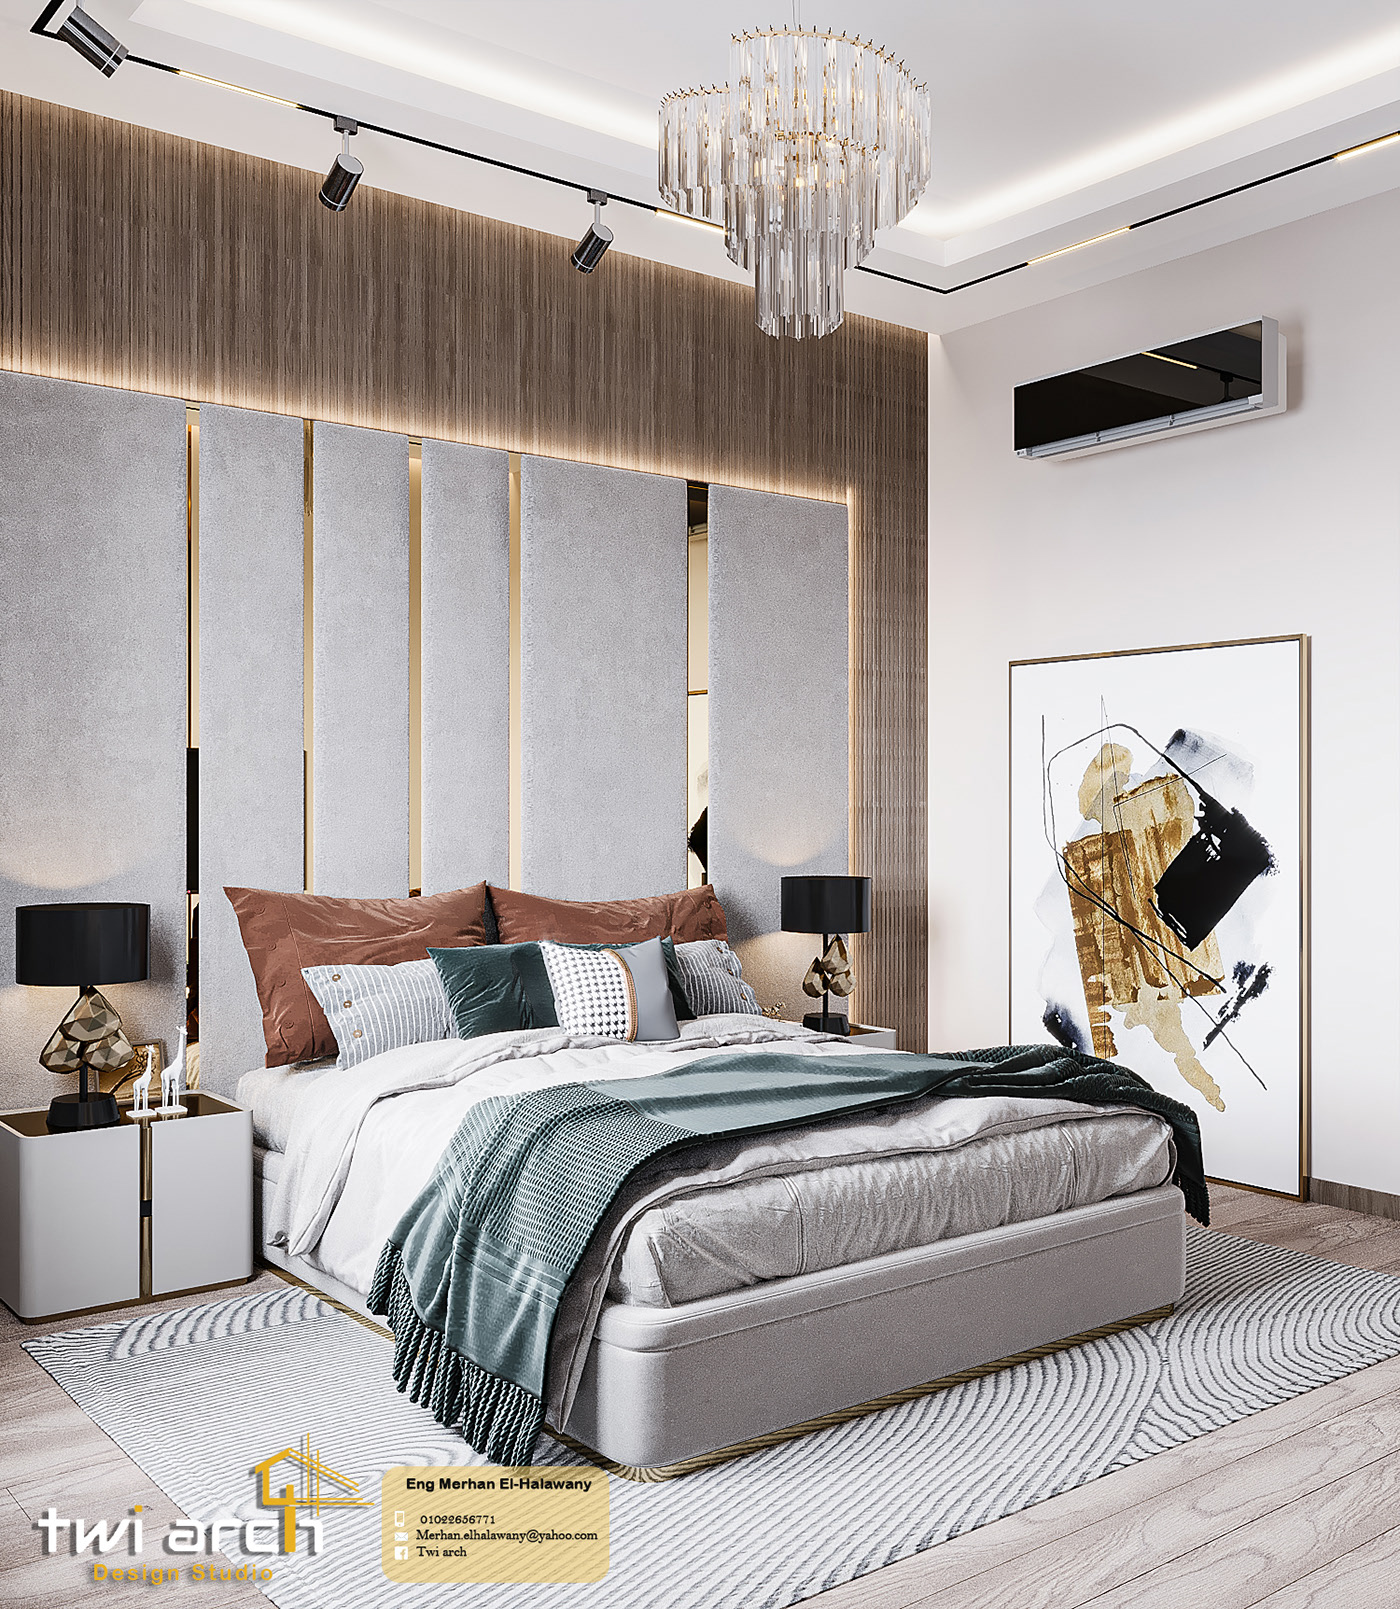 Luxury master bedroom design in kSA on Behance